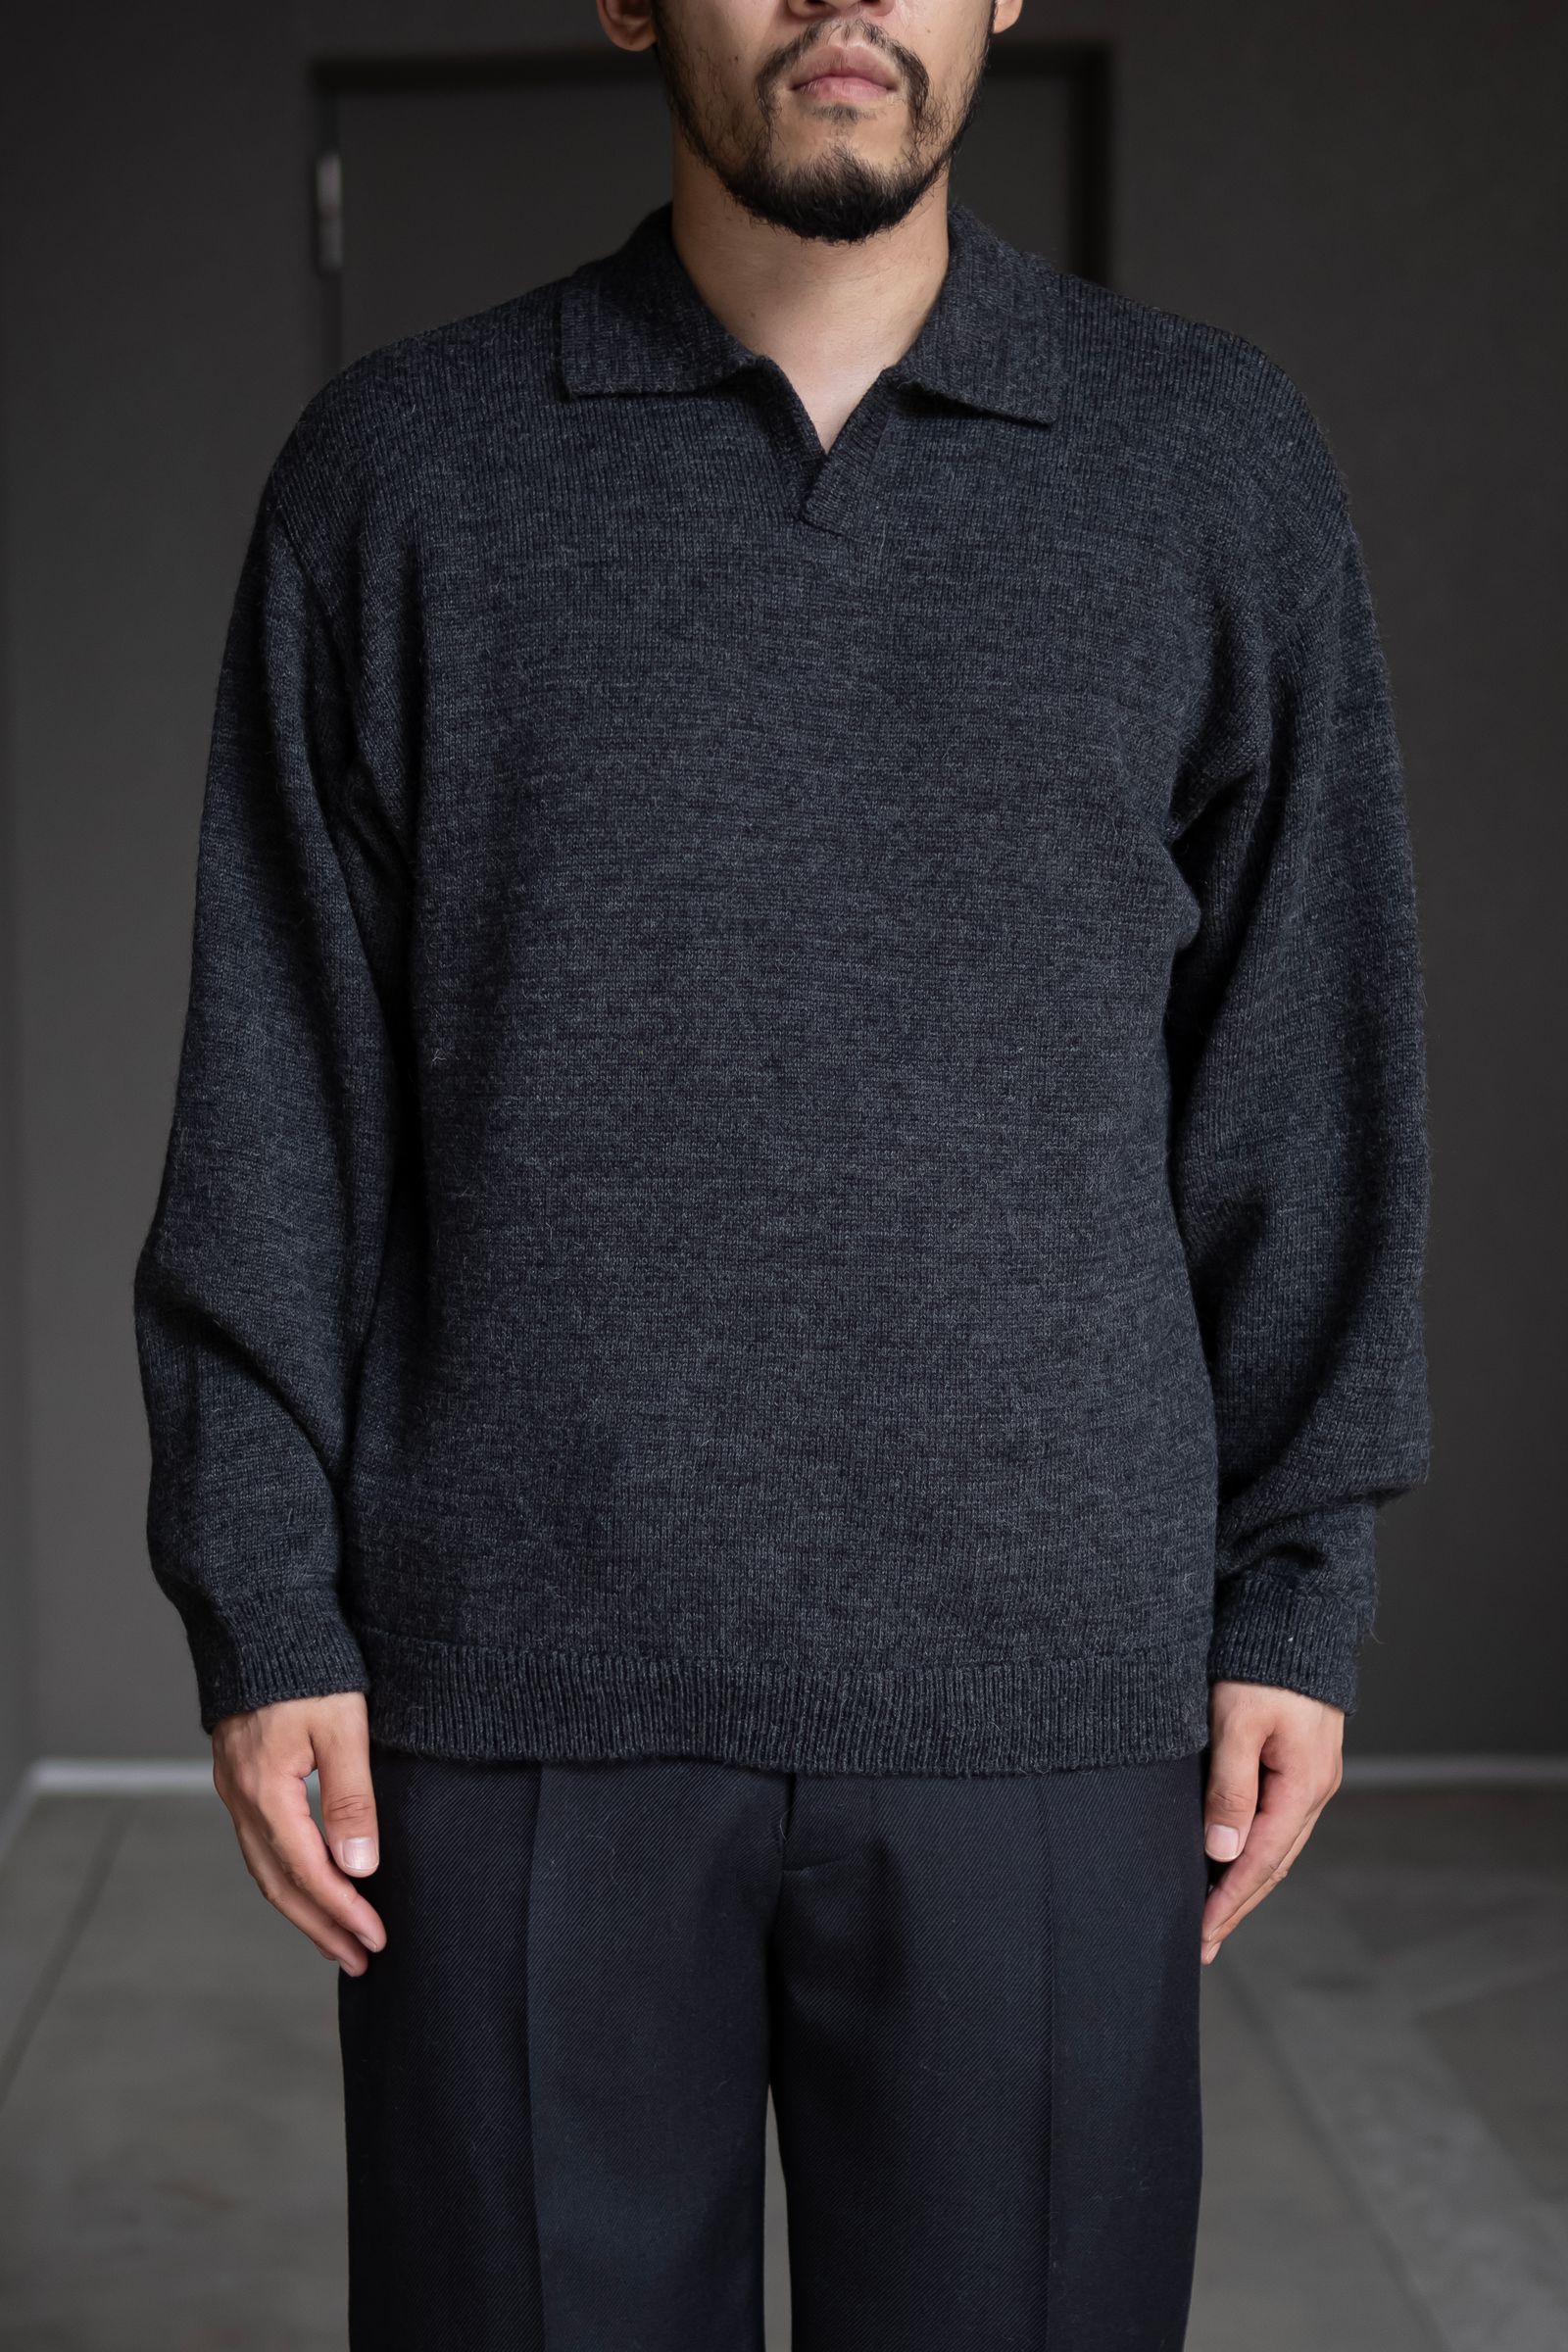 Blanc YM - Wool Knit skipper Shirt / Brown | Retikle Online Store